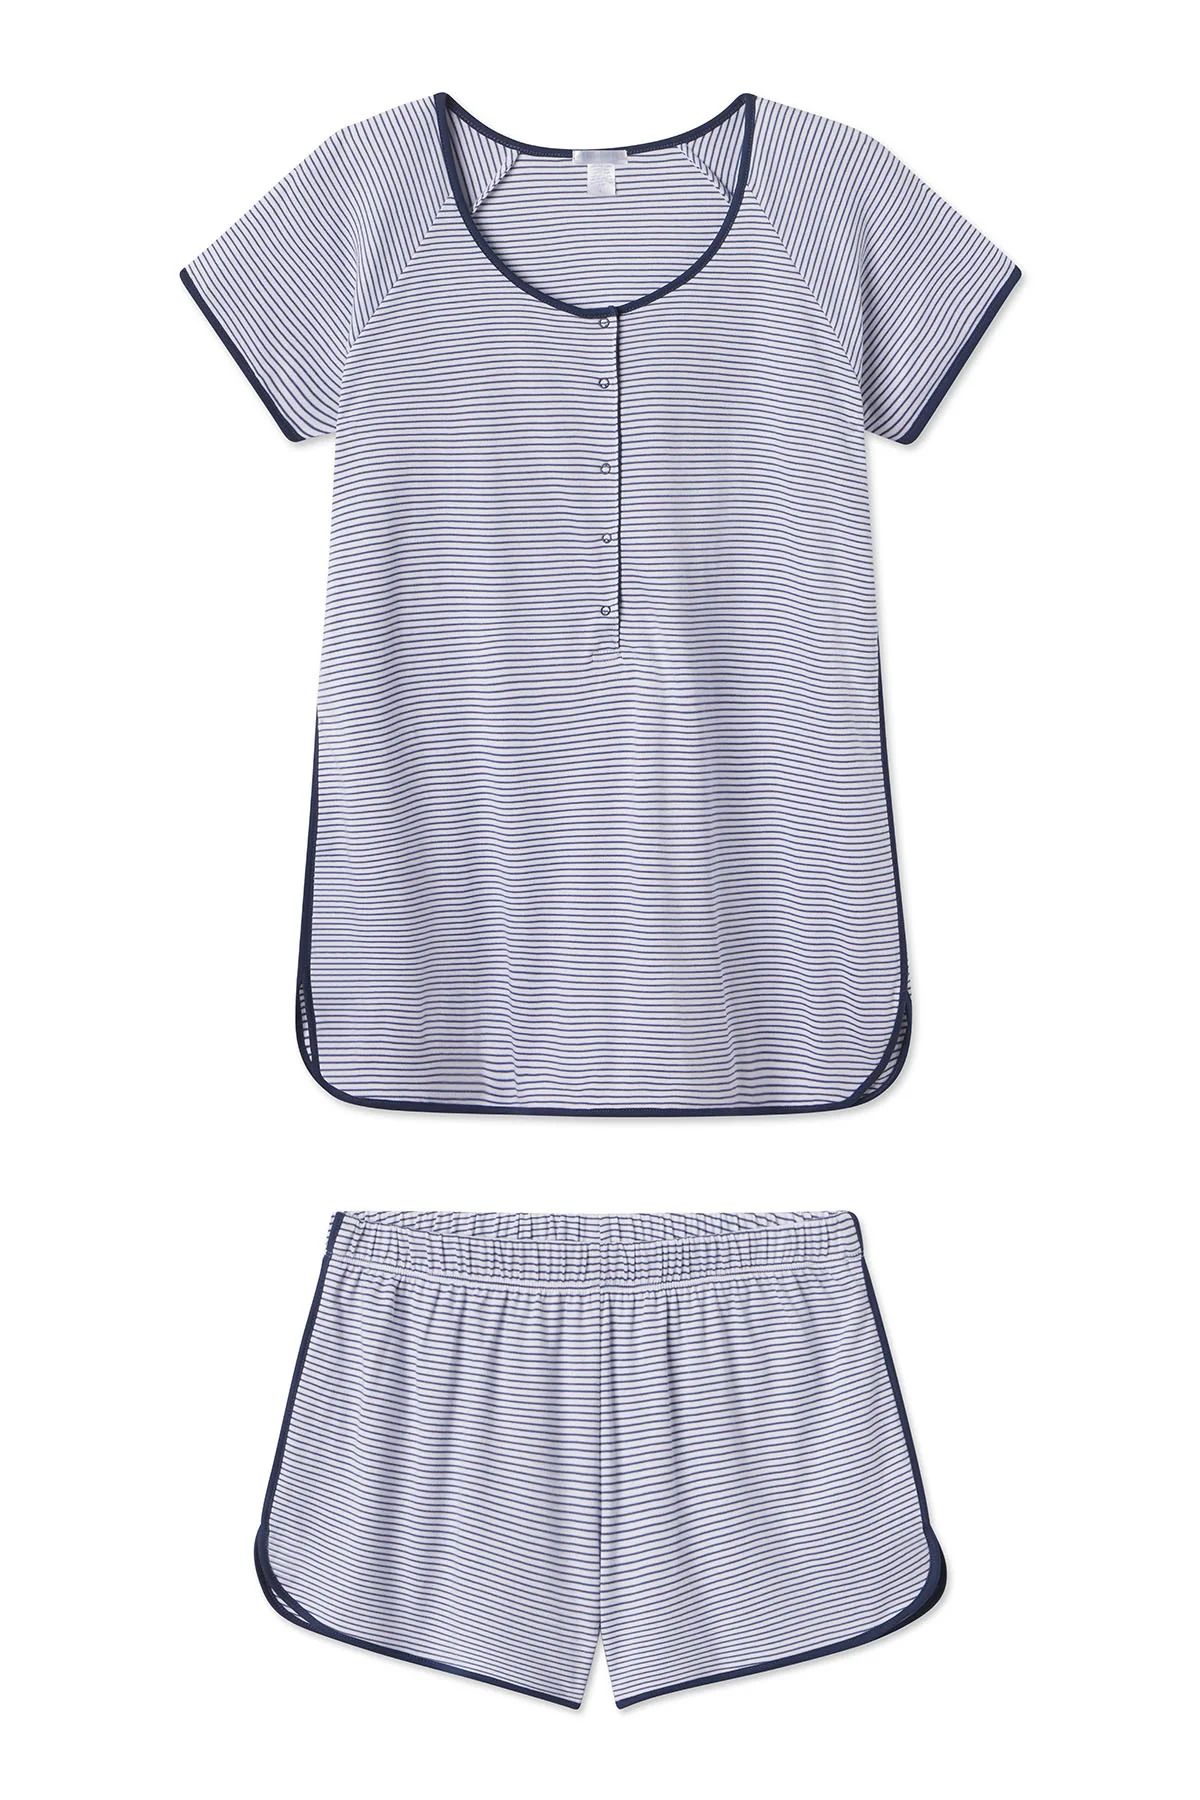 Pima Maternity Shorts Set in Classic Navy | Lake Pajamas